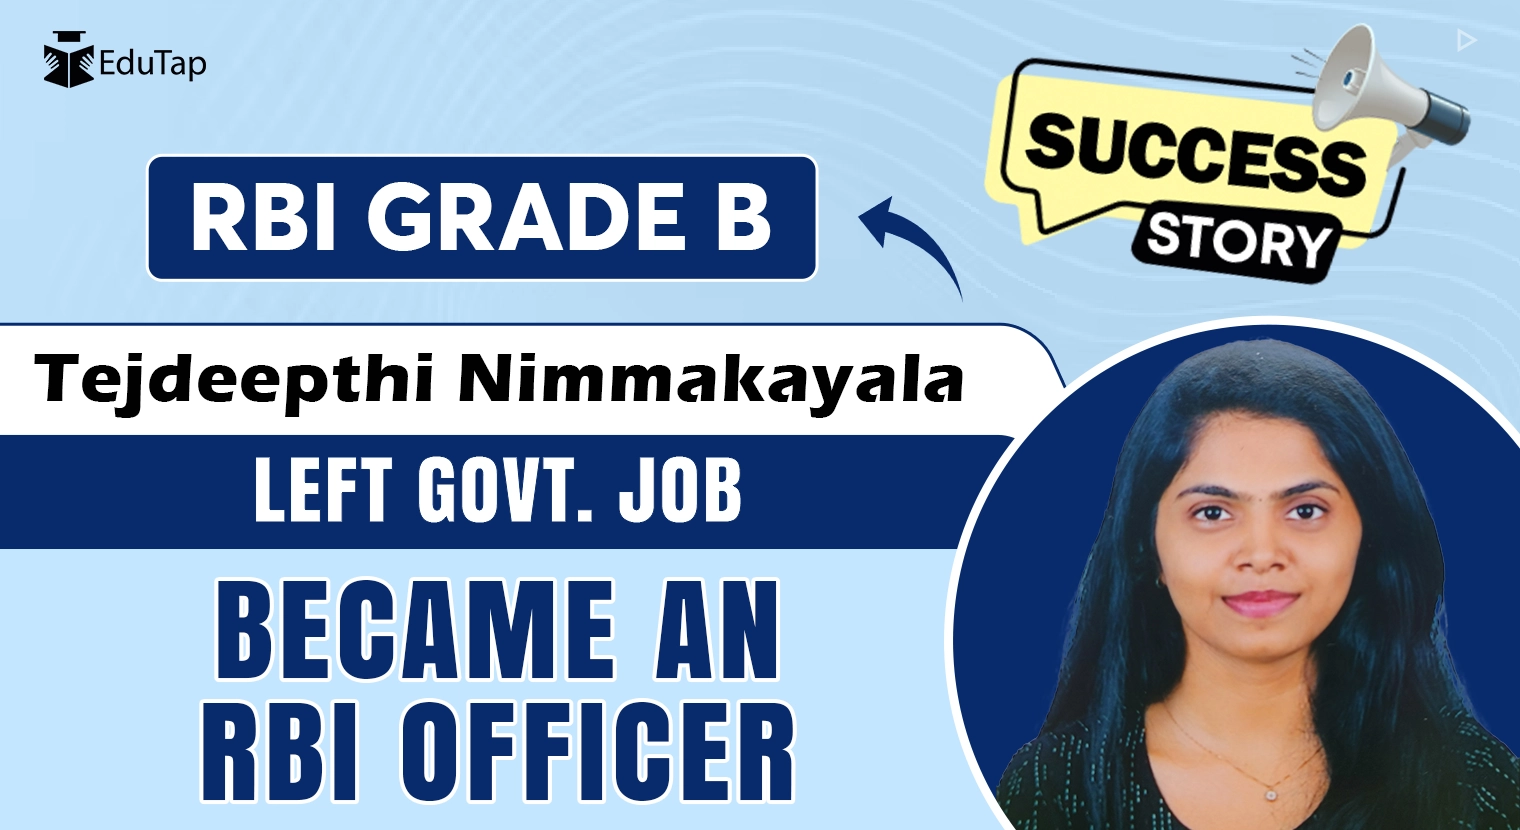 RBI Grade B Success Story - Tejdeepthi Nimmakayala